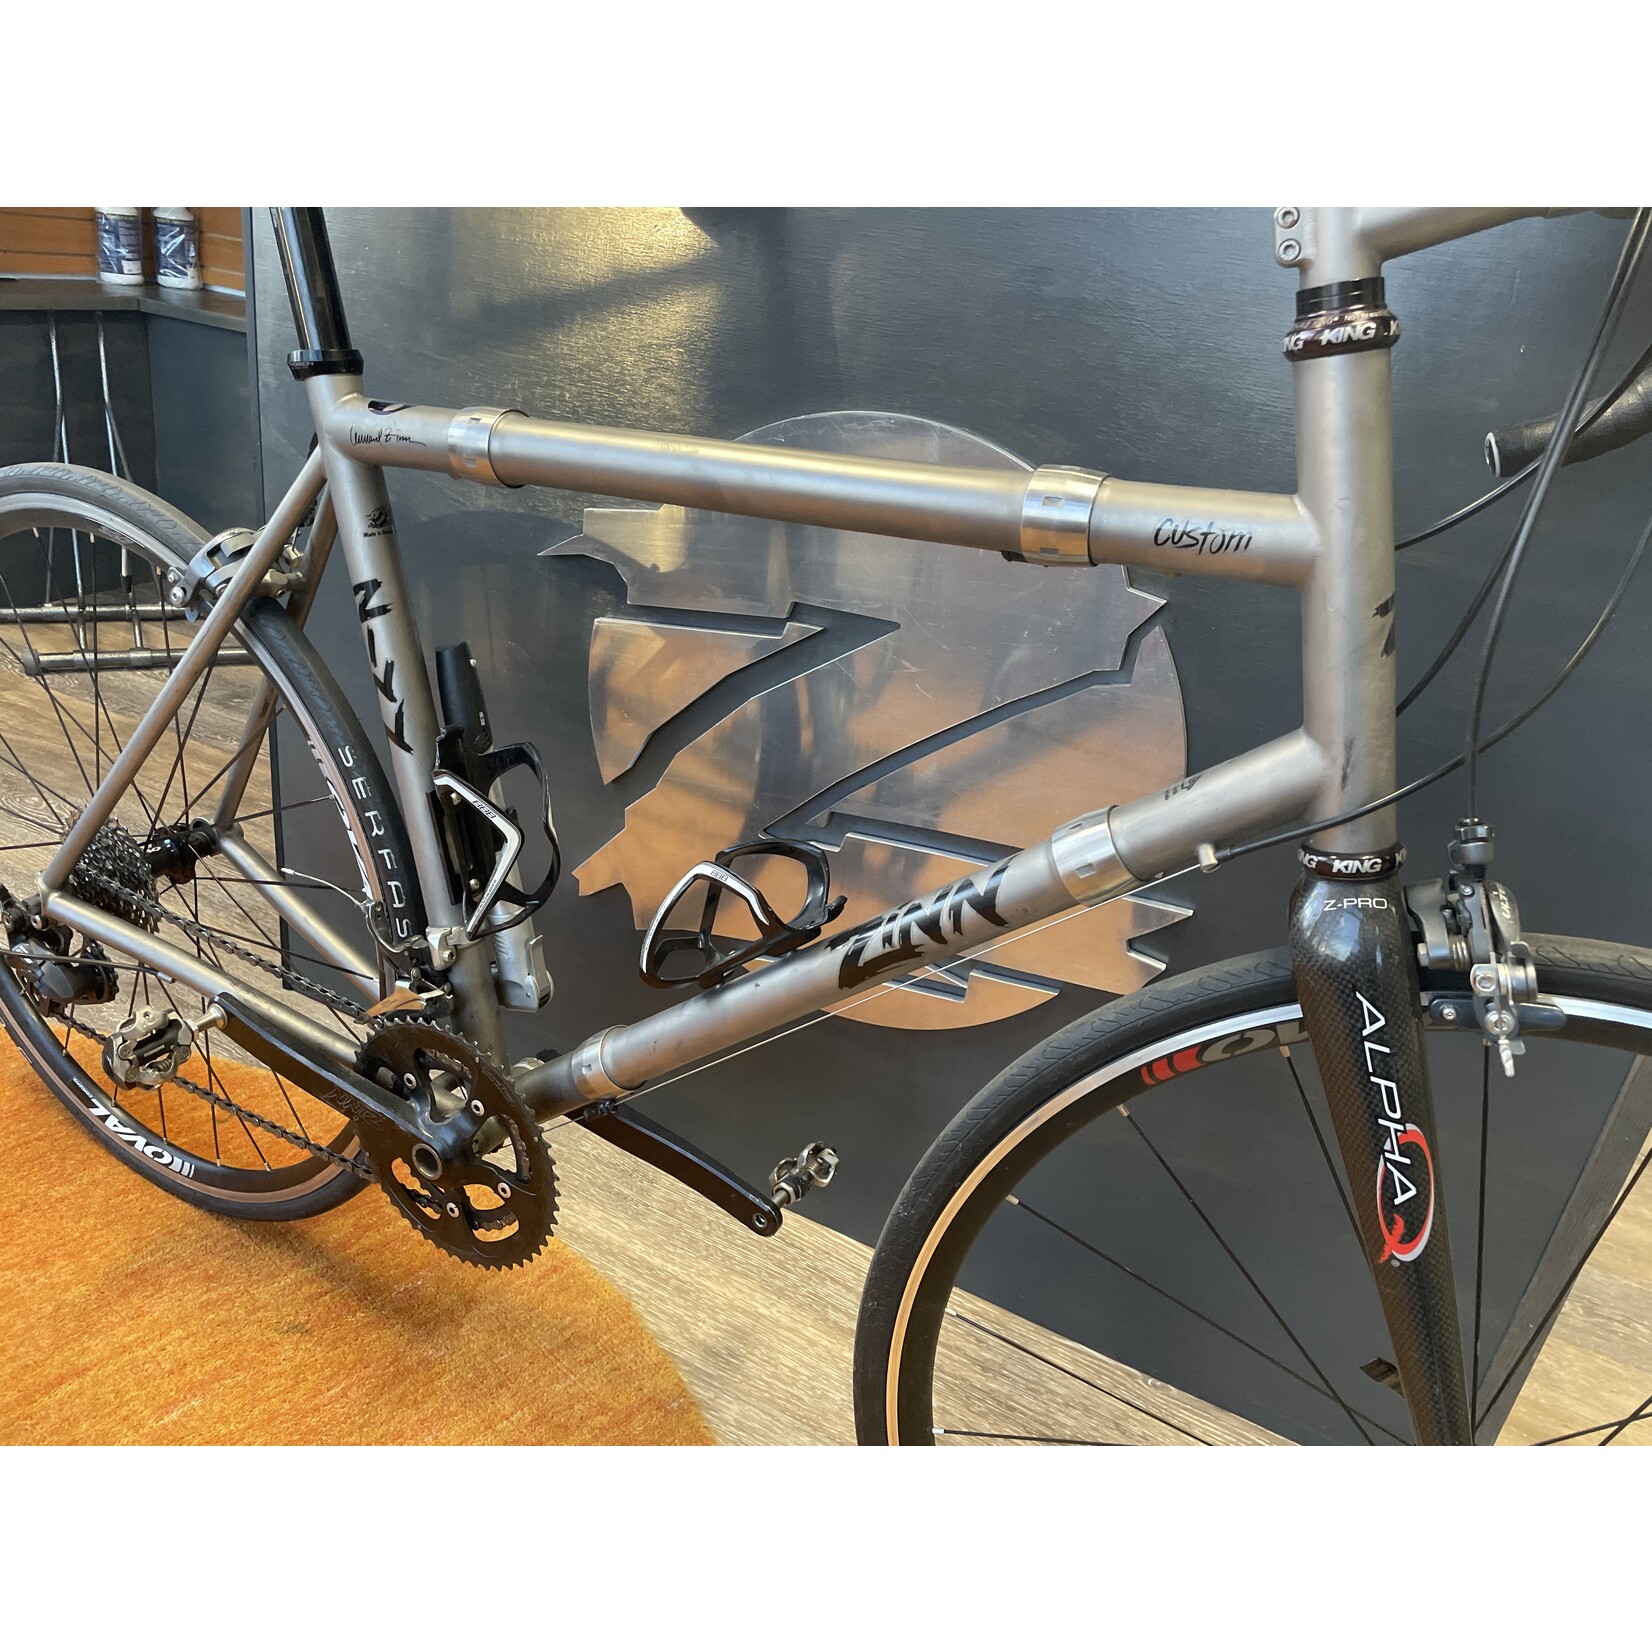 Zinn Custom Titanium Road Travel Bike - Used in great condition for 6'4" - 6'7" rider (Lennard's personal travel road bike)